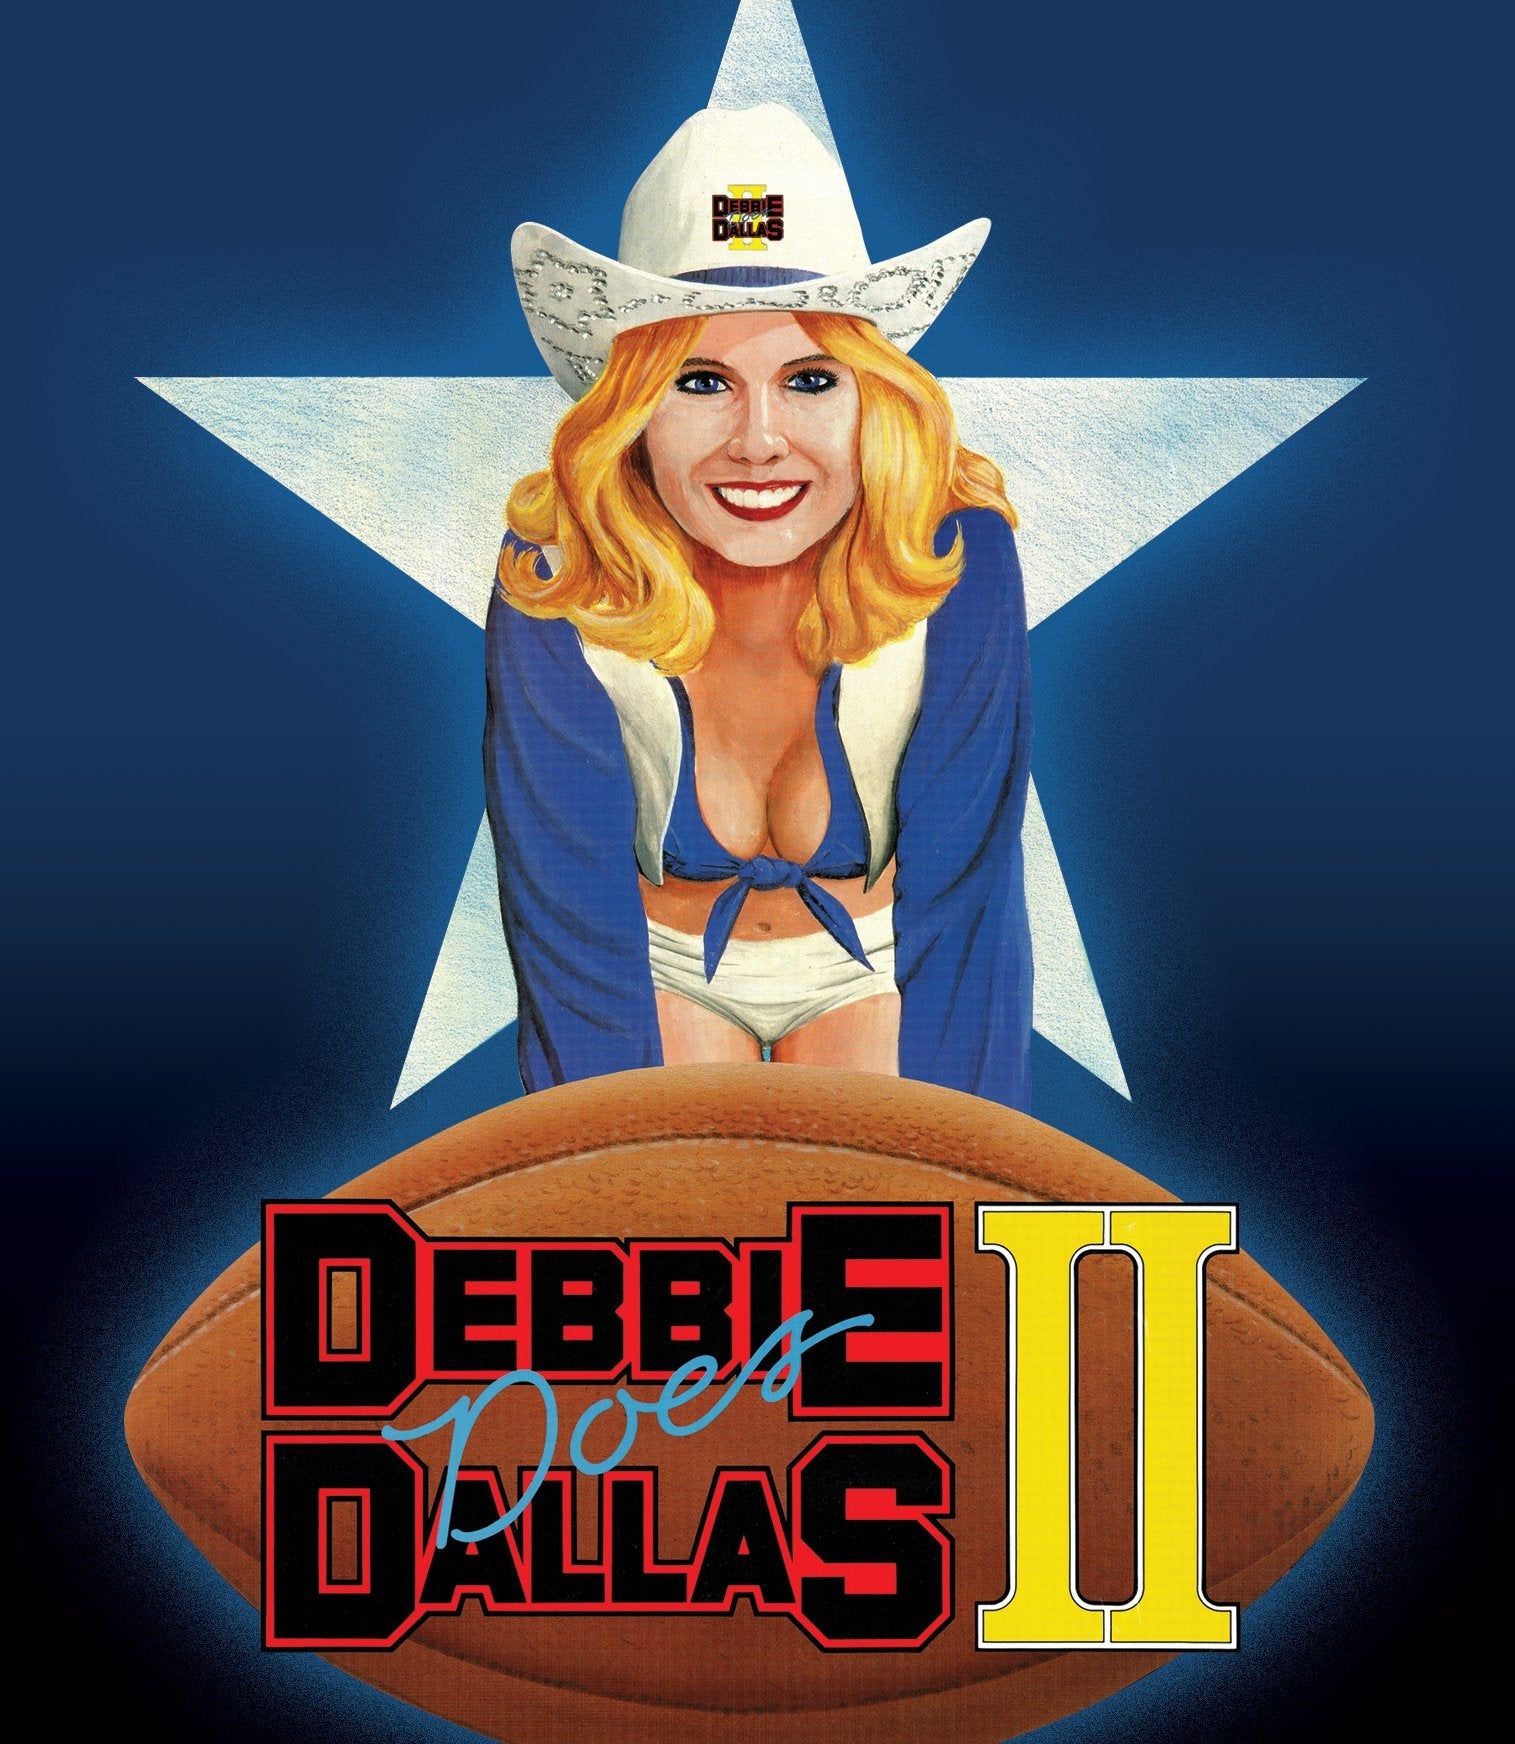 Debbie Does Dallas Online stacy corpus